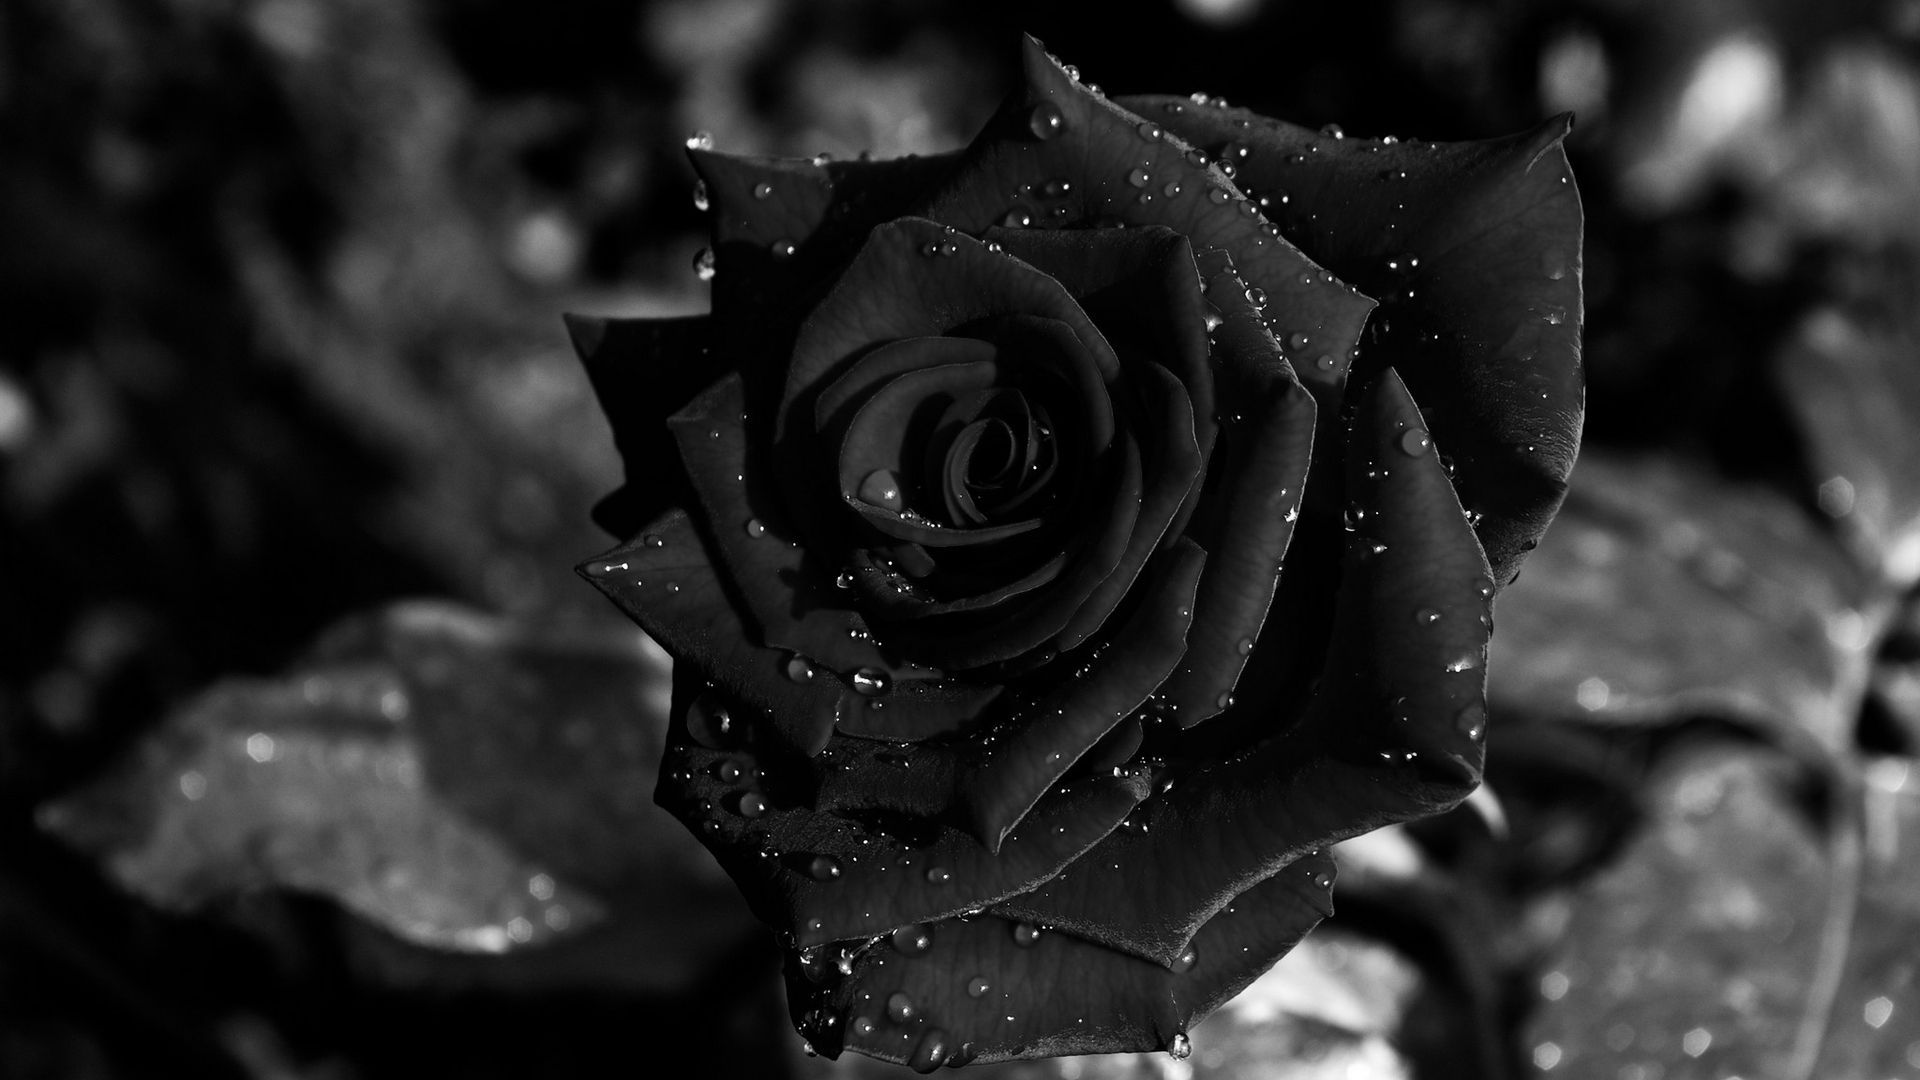 Fondos de pantalla de rosas negras - FondosMil